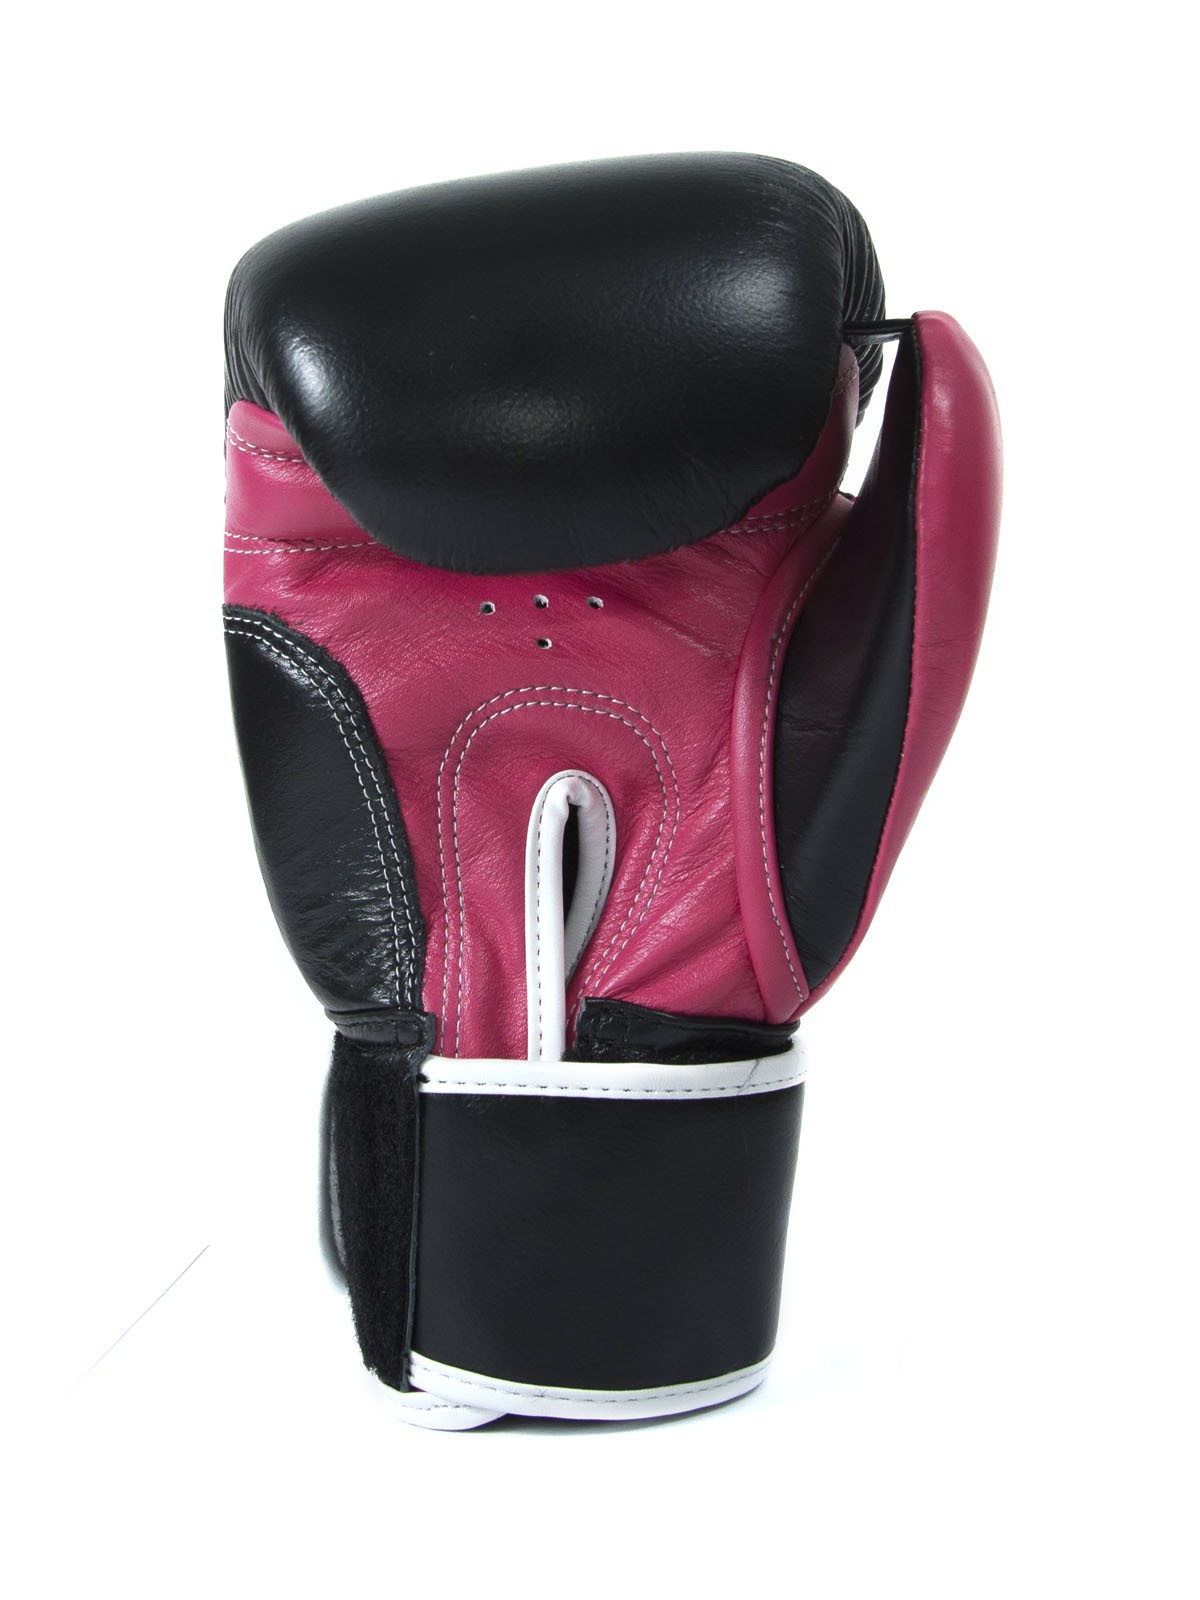 Sandee Muay Thai Boxing Gloves Neon Black & Pink 